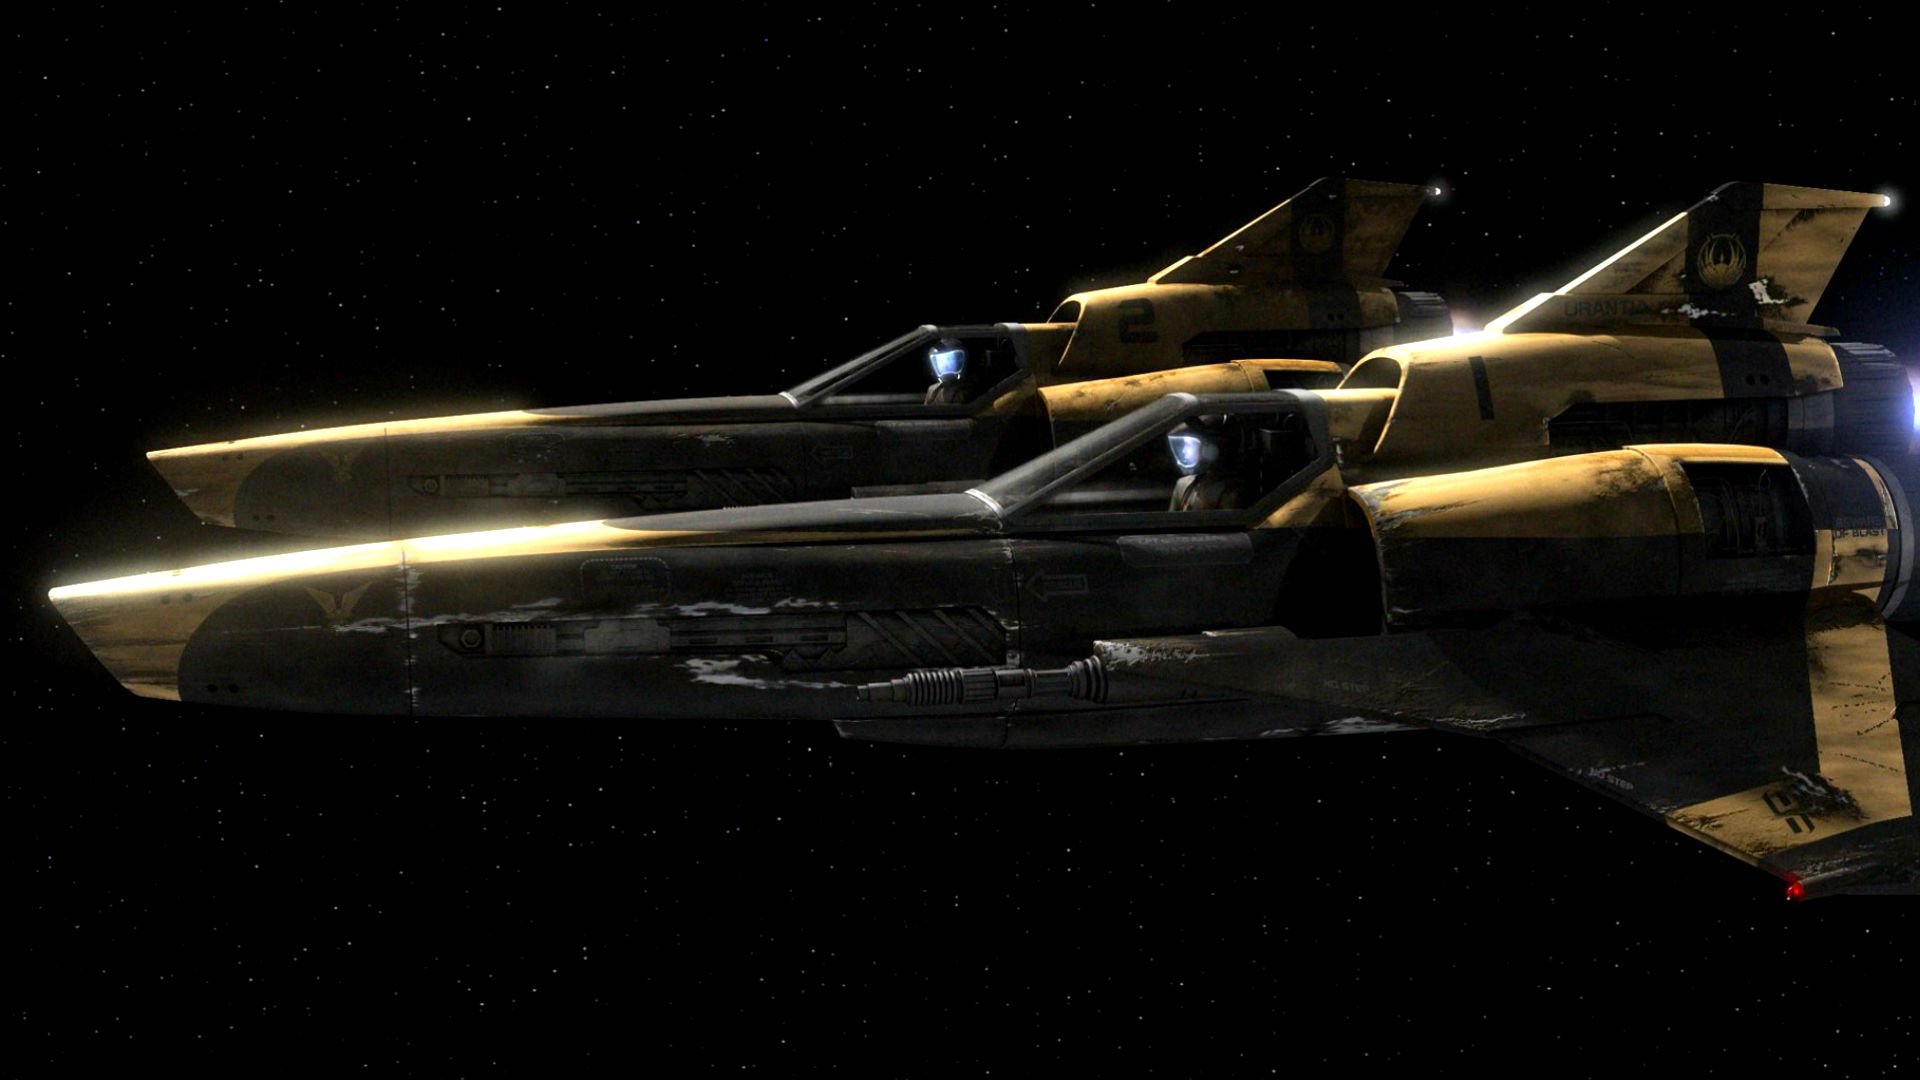 Battlestar Galactica Spaceships Image